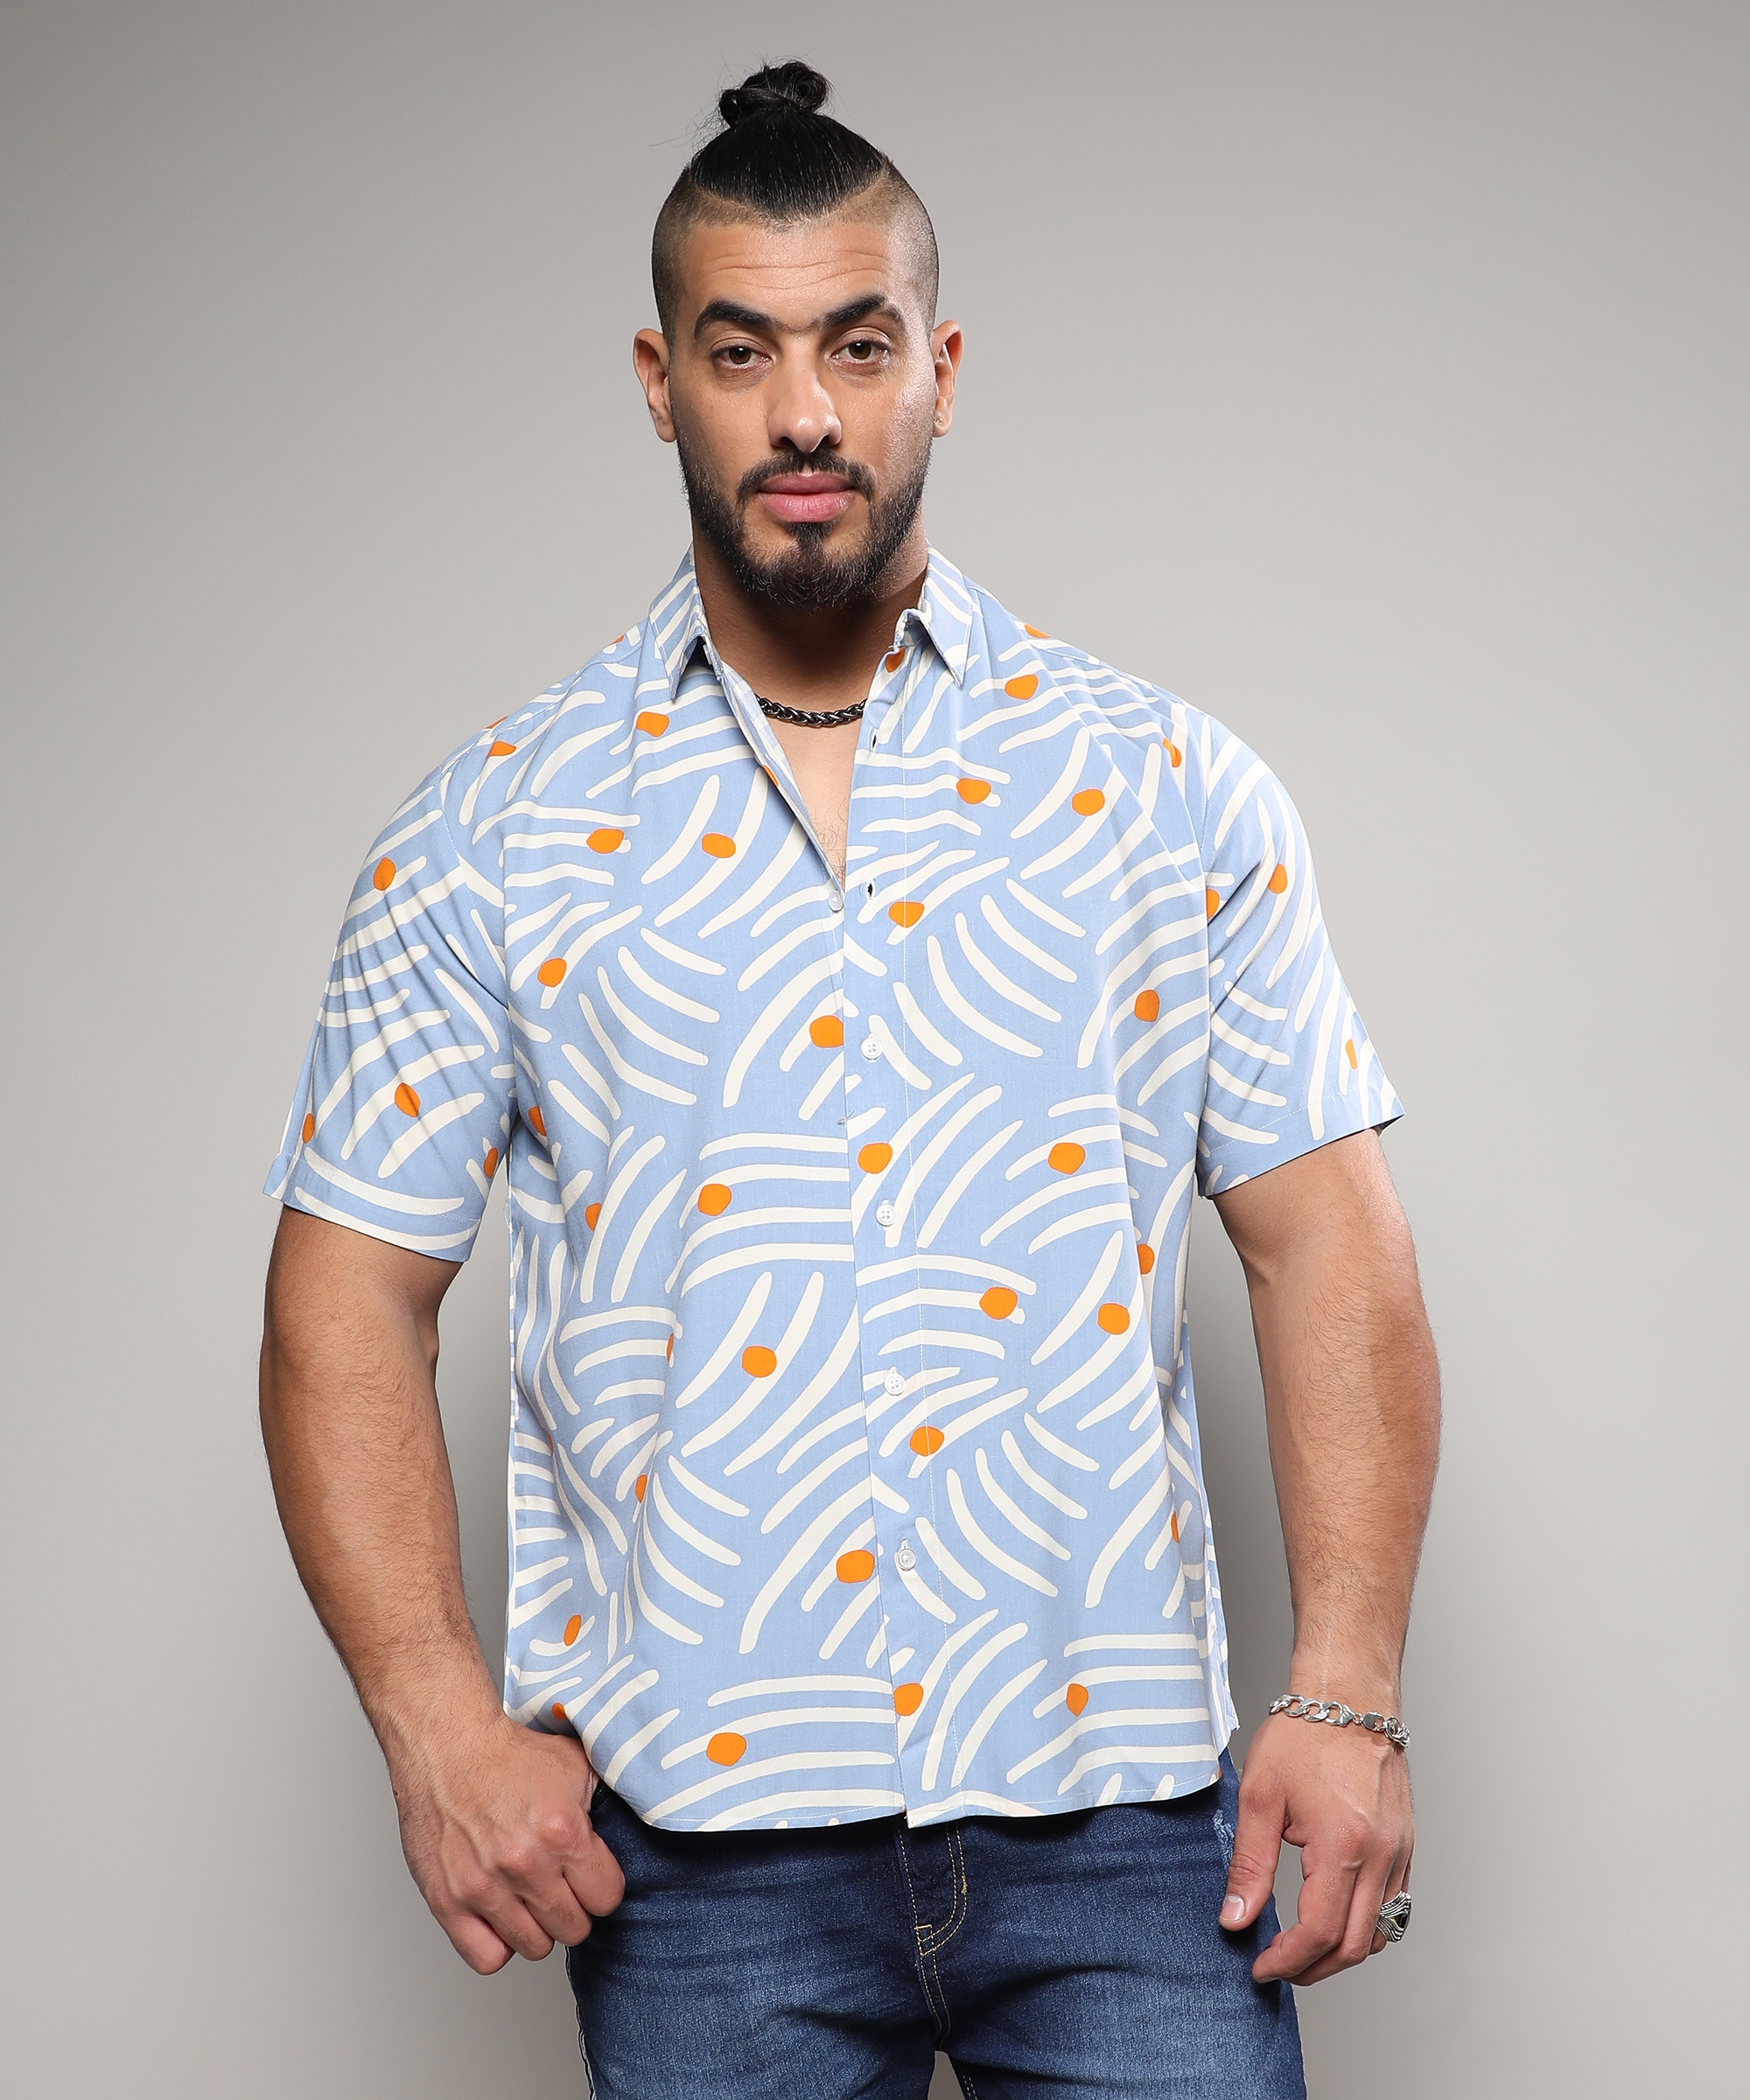 Men's Abstract Print Button Up Shirt